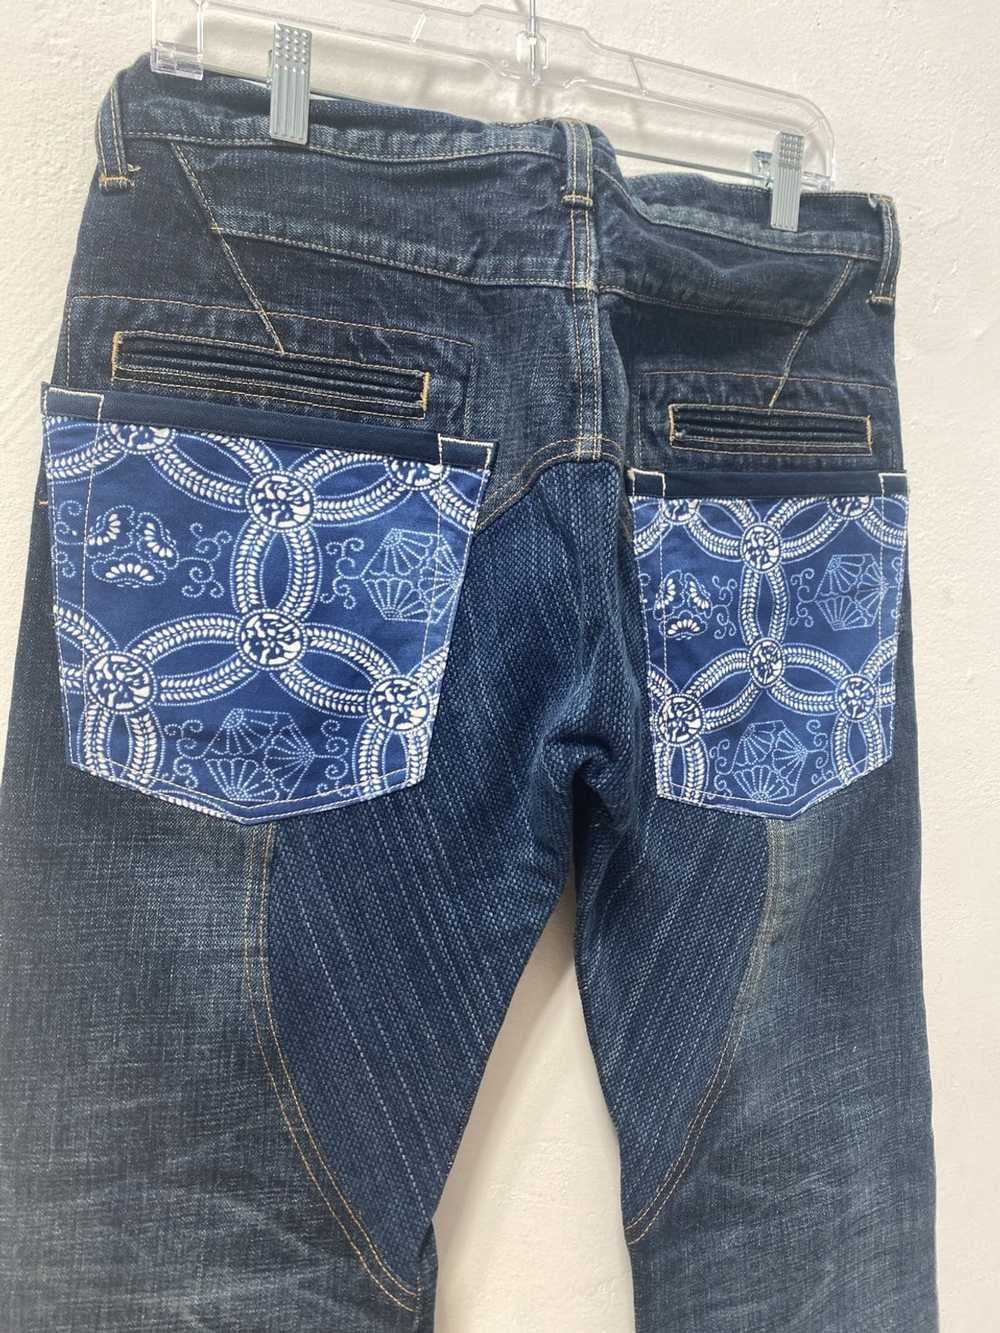 Junya Watanabe AW14 Boro Patterned Jeans - image 3